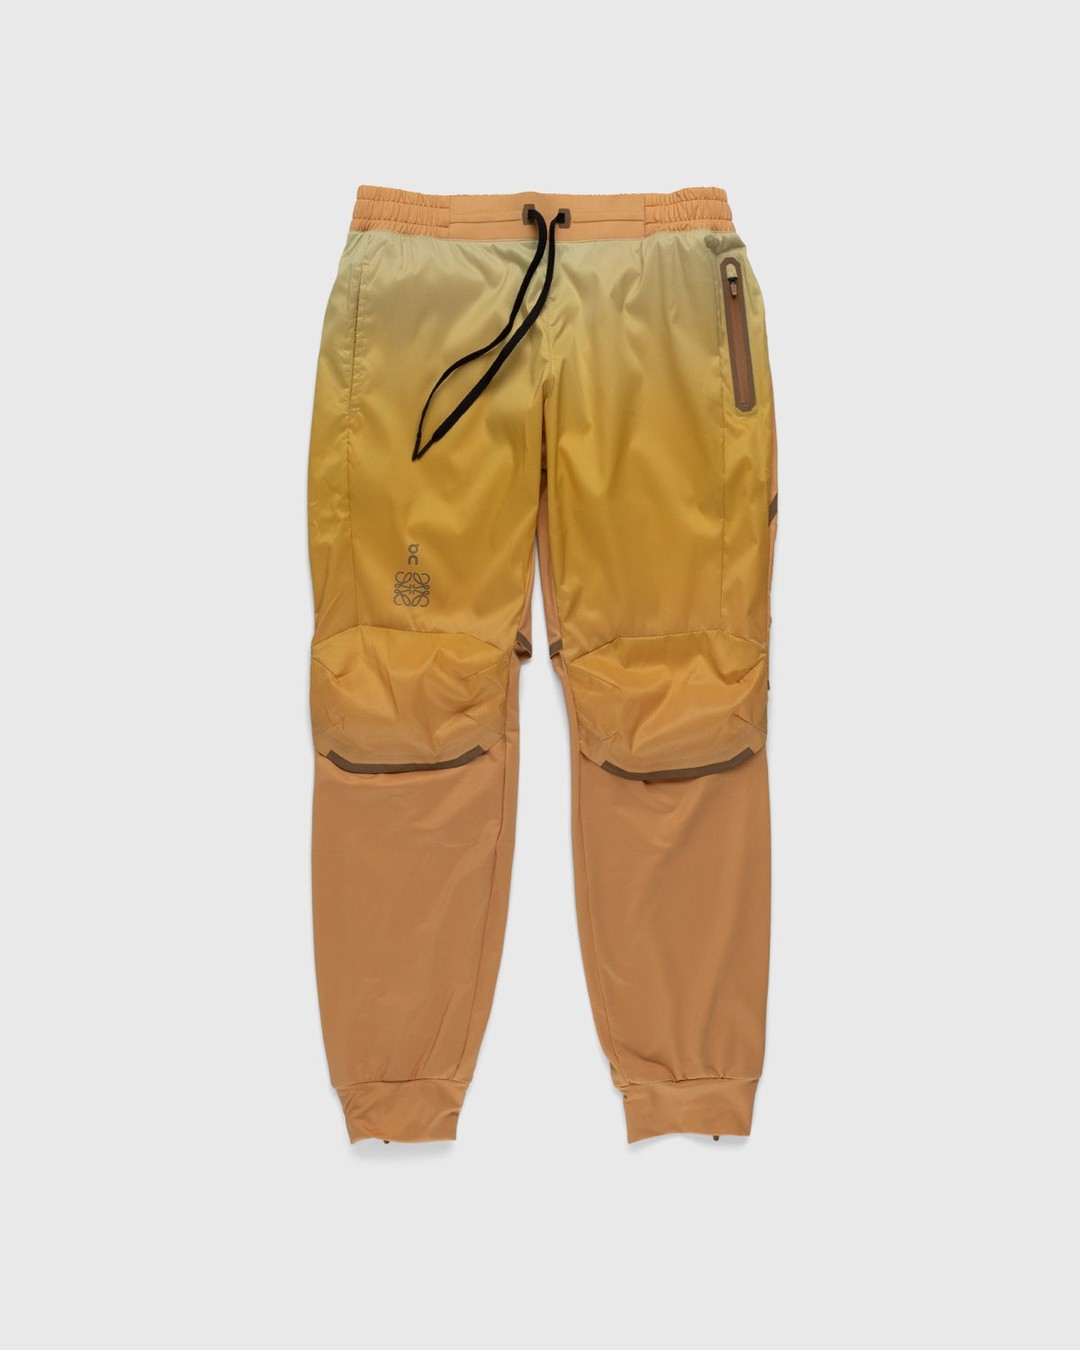 Loewe x On – Women's Technical Running Pants Gradient Orange - Active Pants - Orange - Image 1